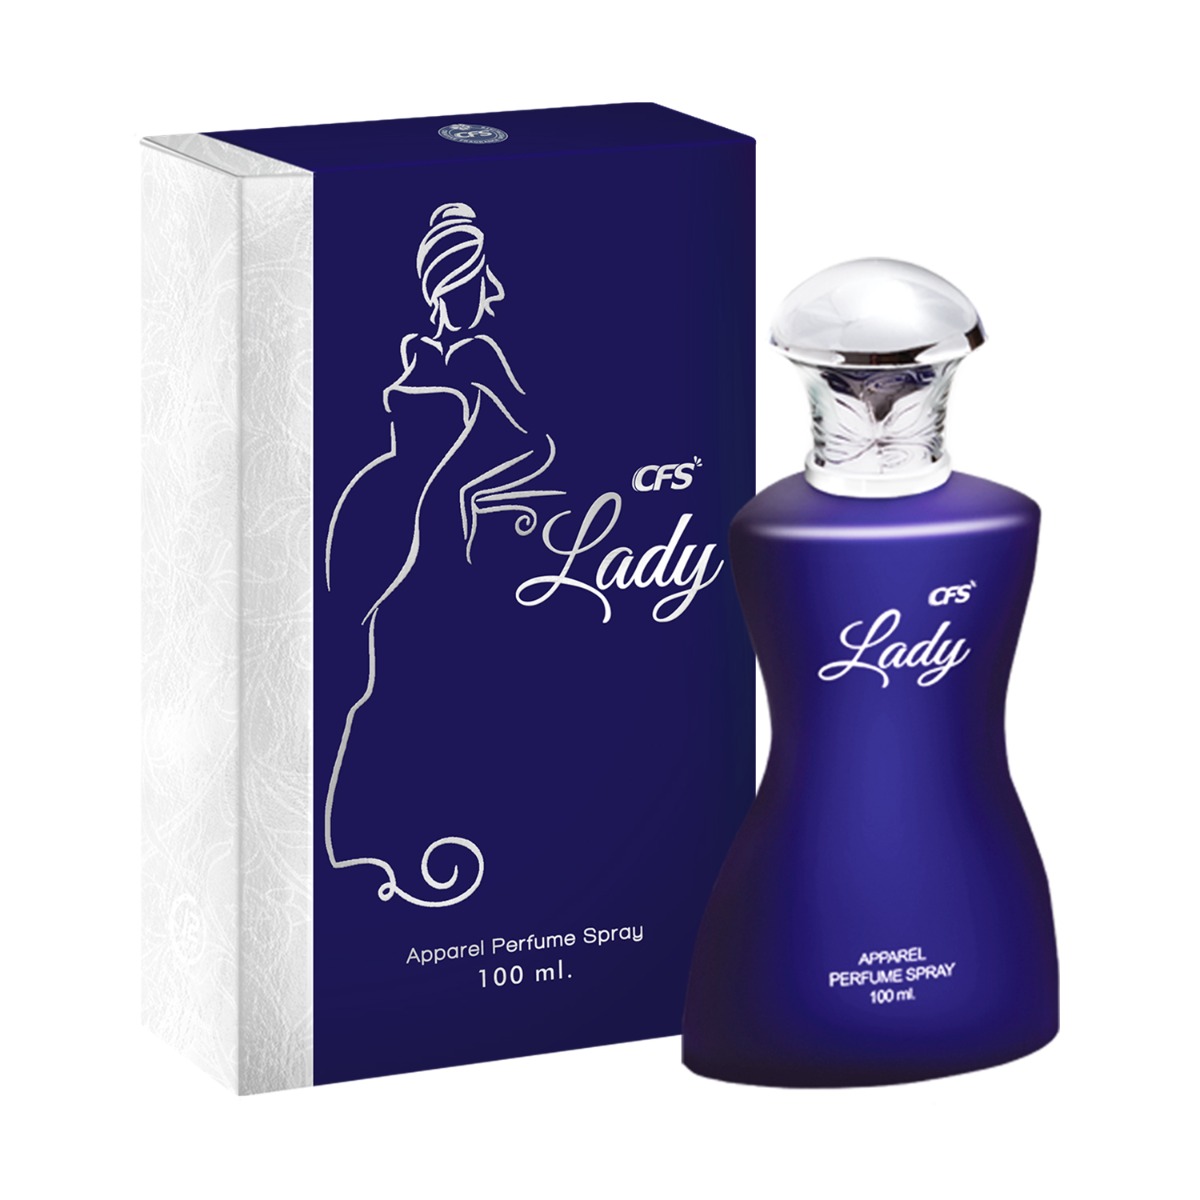 CFS Lady Long Lasting Apparel Perfume Spray, 100ml